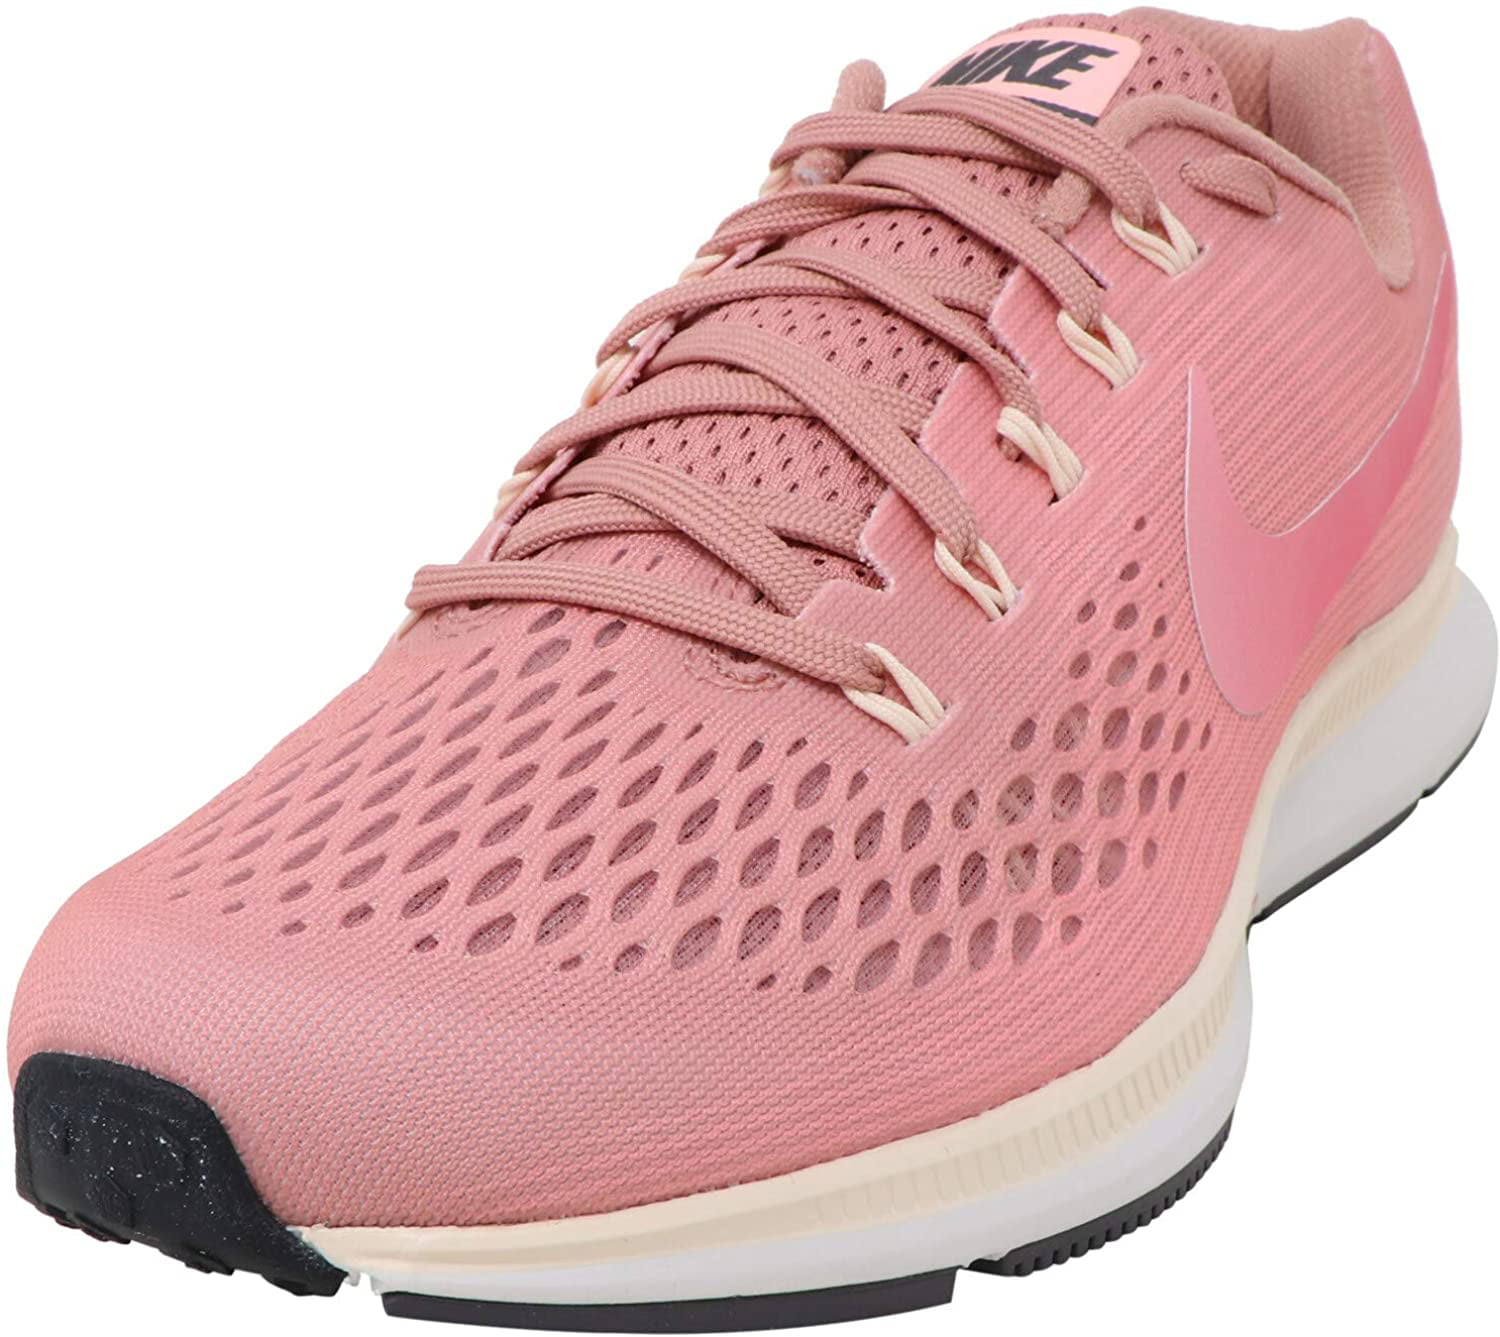 Nike Womens Air Zoom Pegasus 34 Running Trainers 880560 Sneakers Shoes